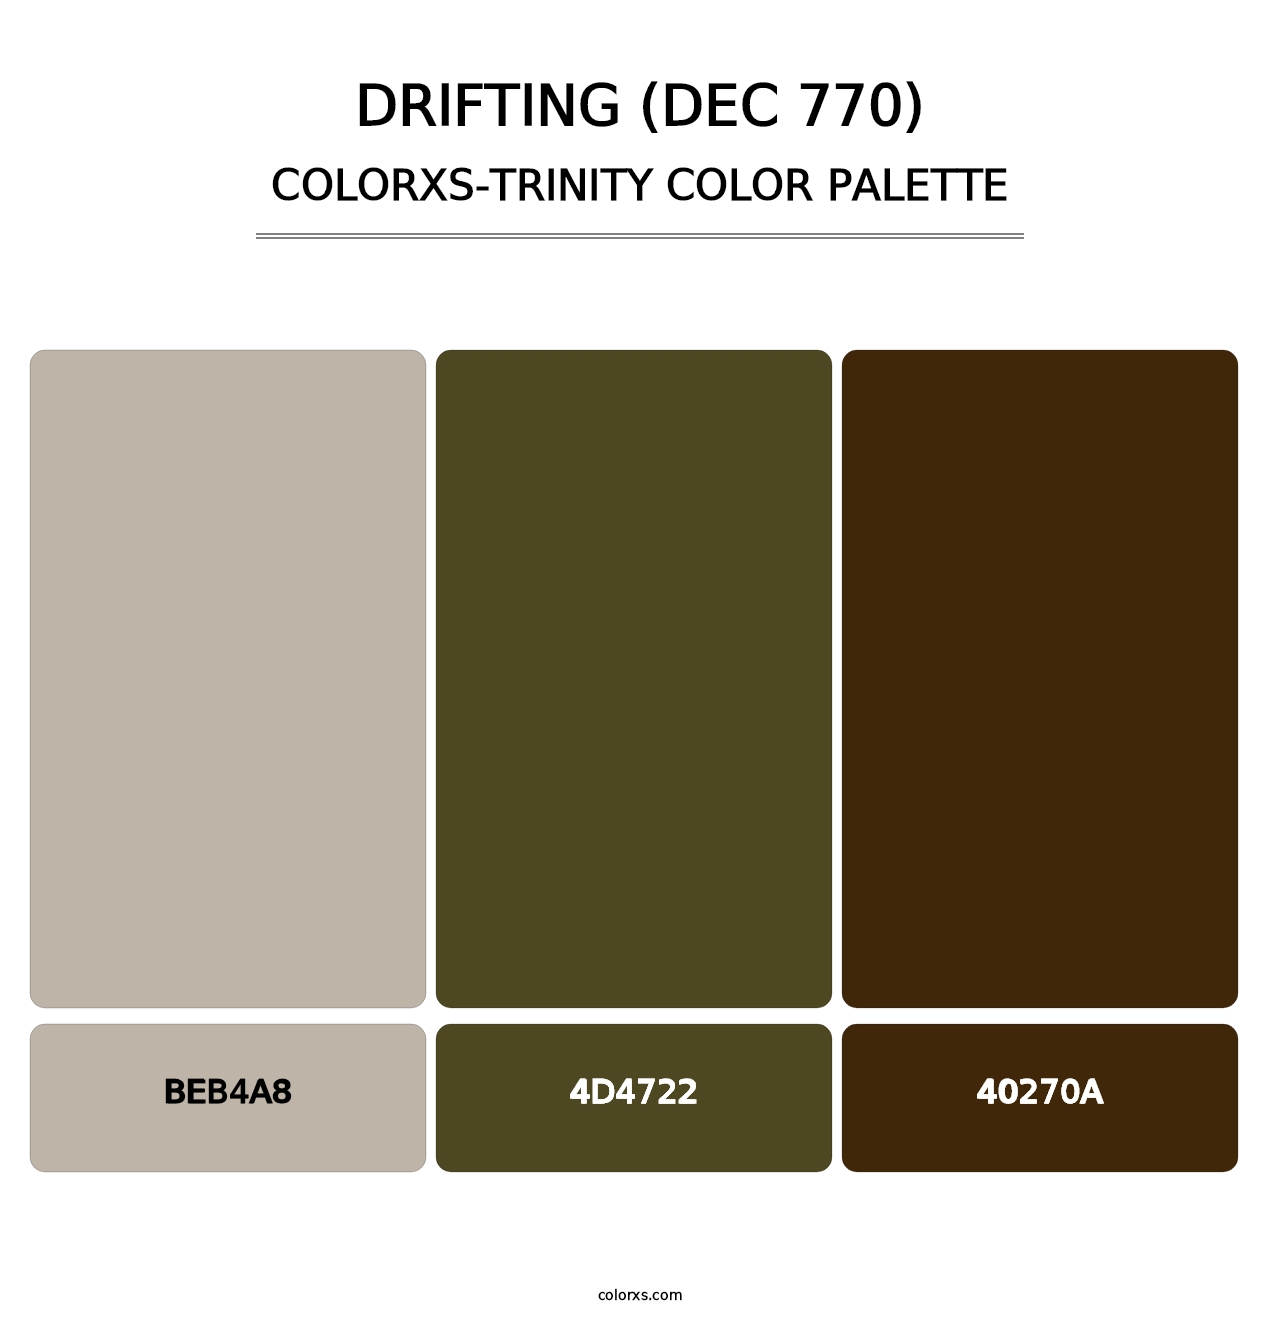 Drifting (DEC 770) - Colorxs Trinity Palette